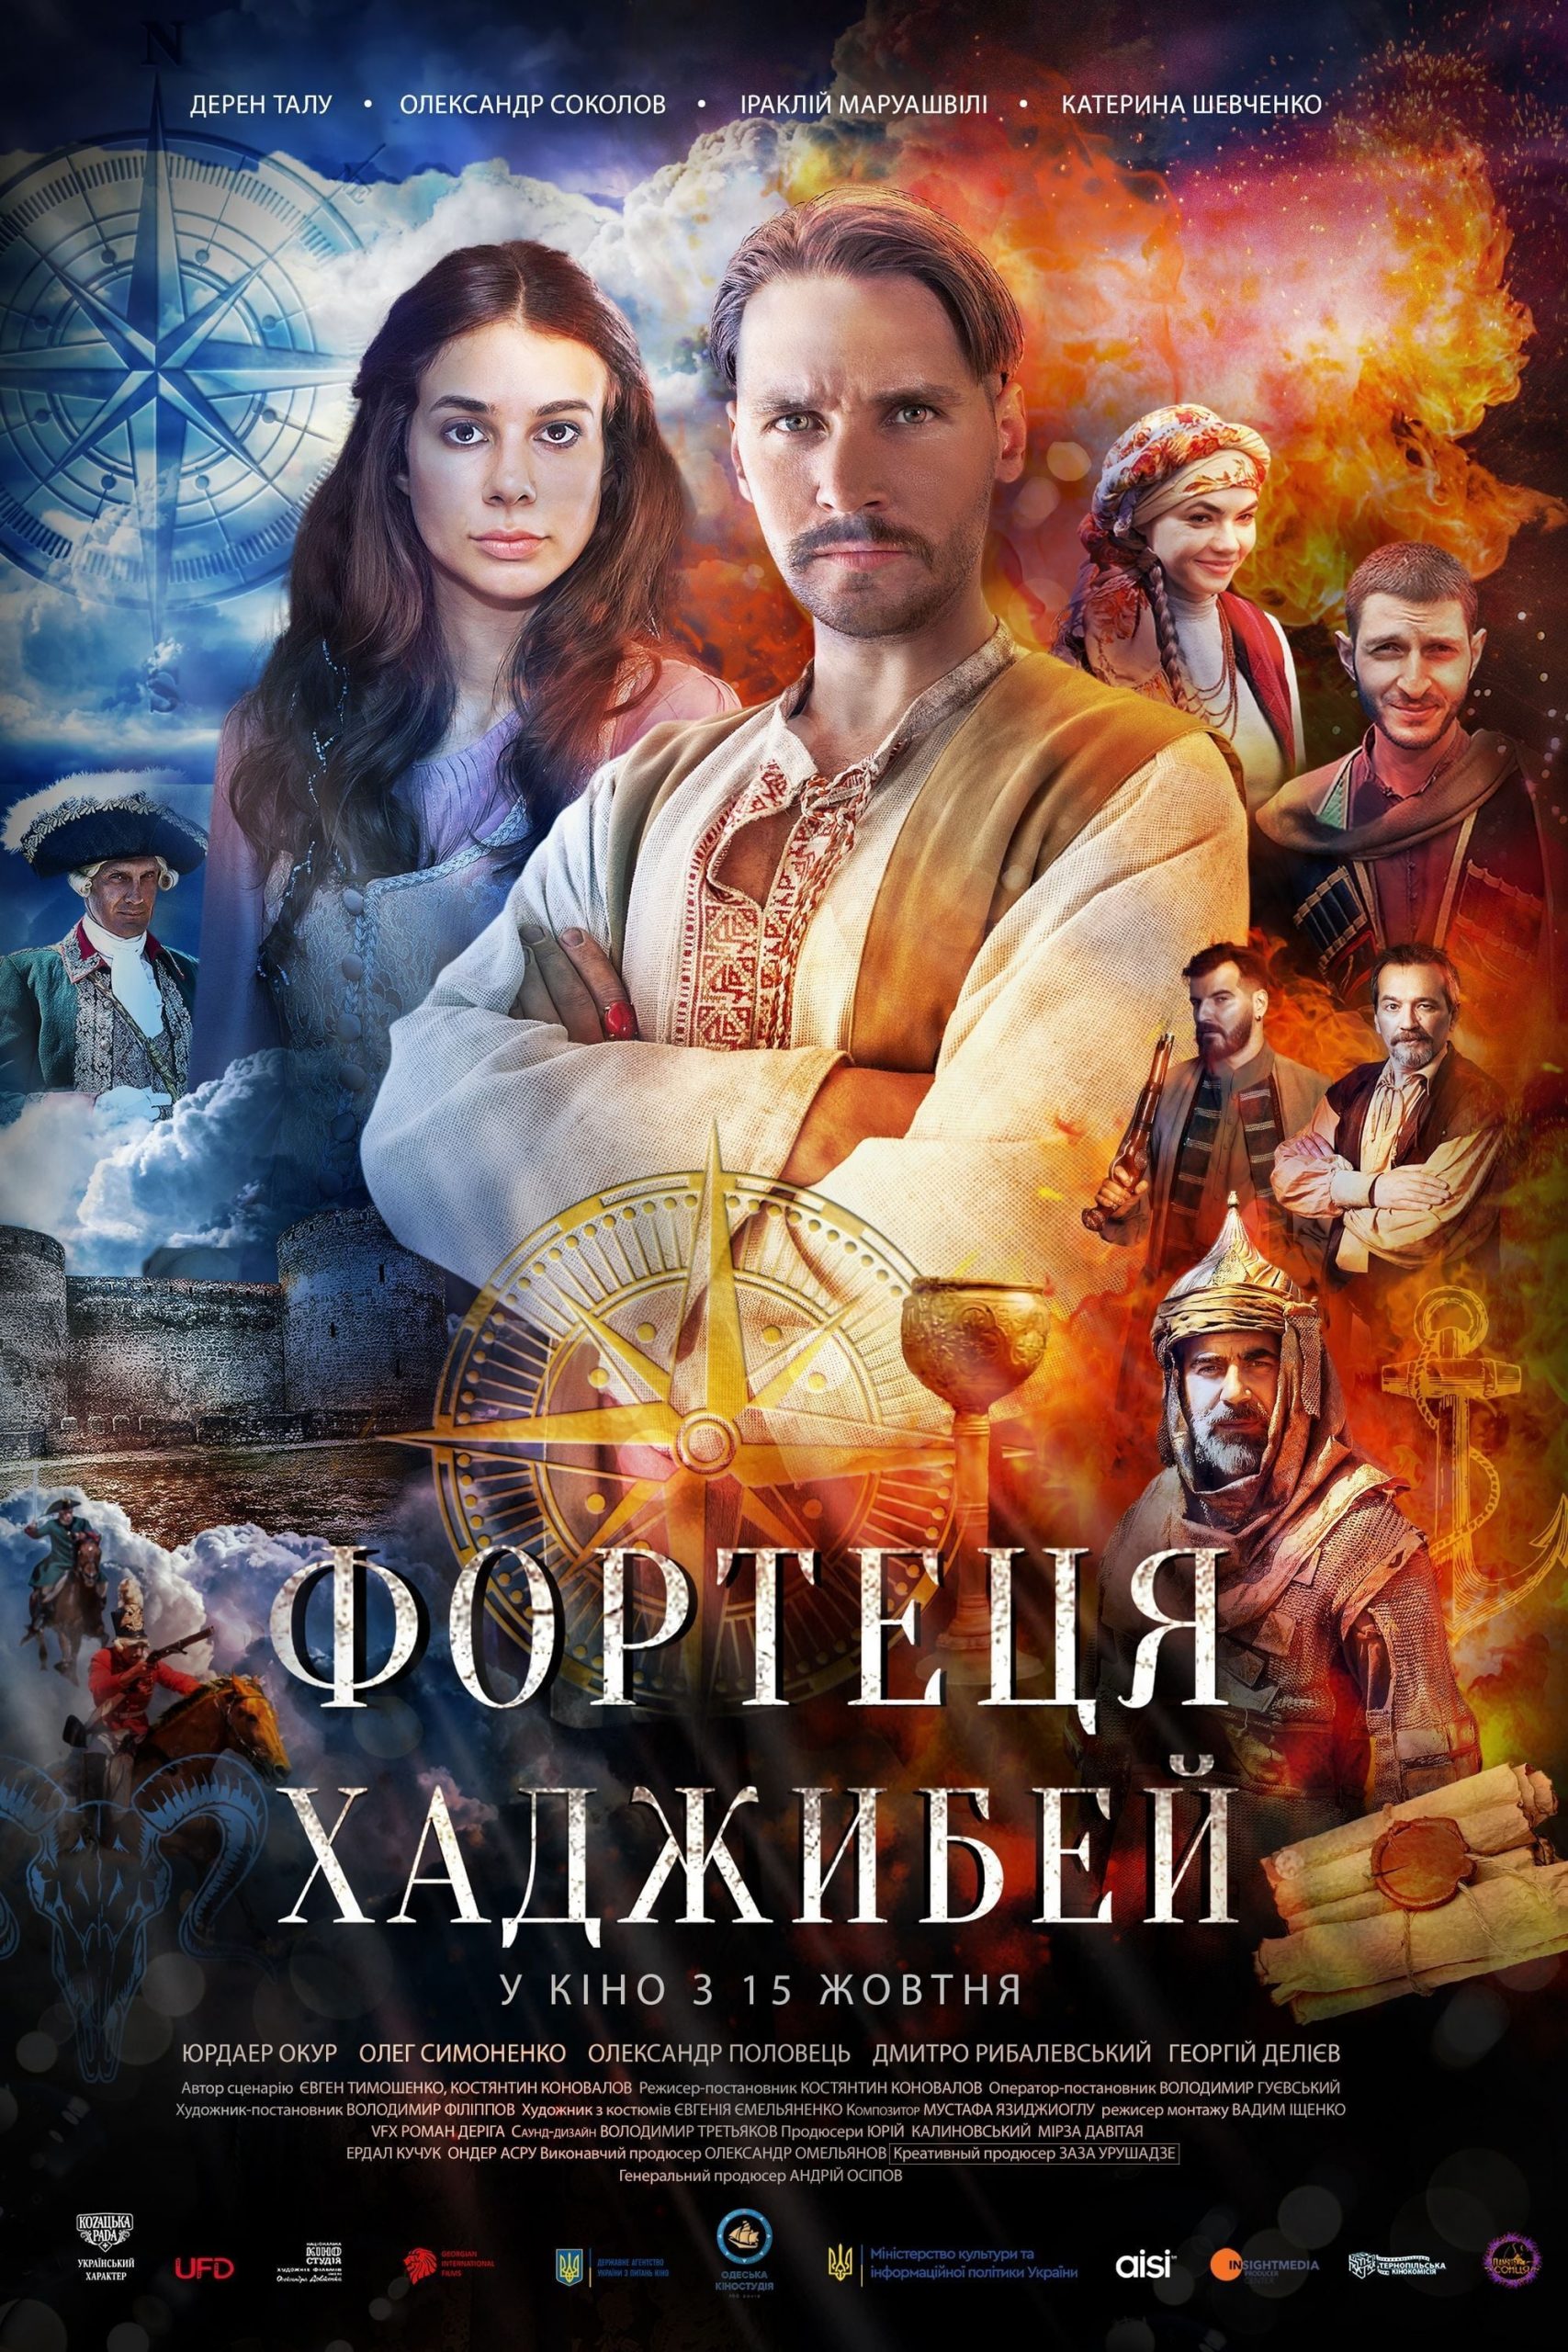 The Ukrainian Film 